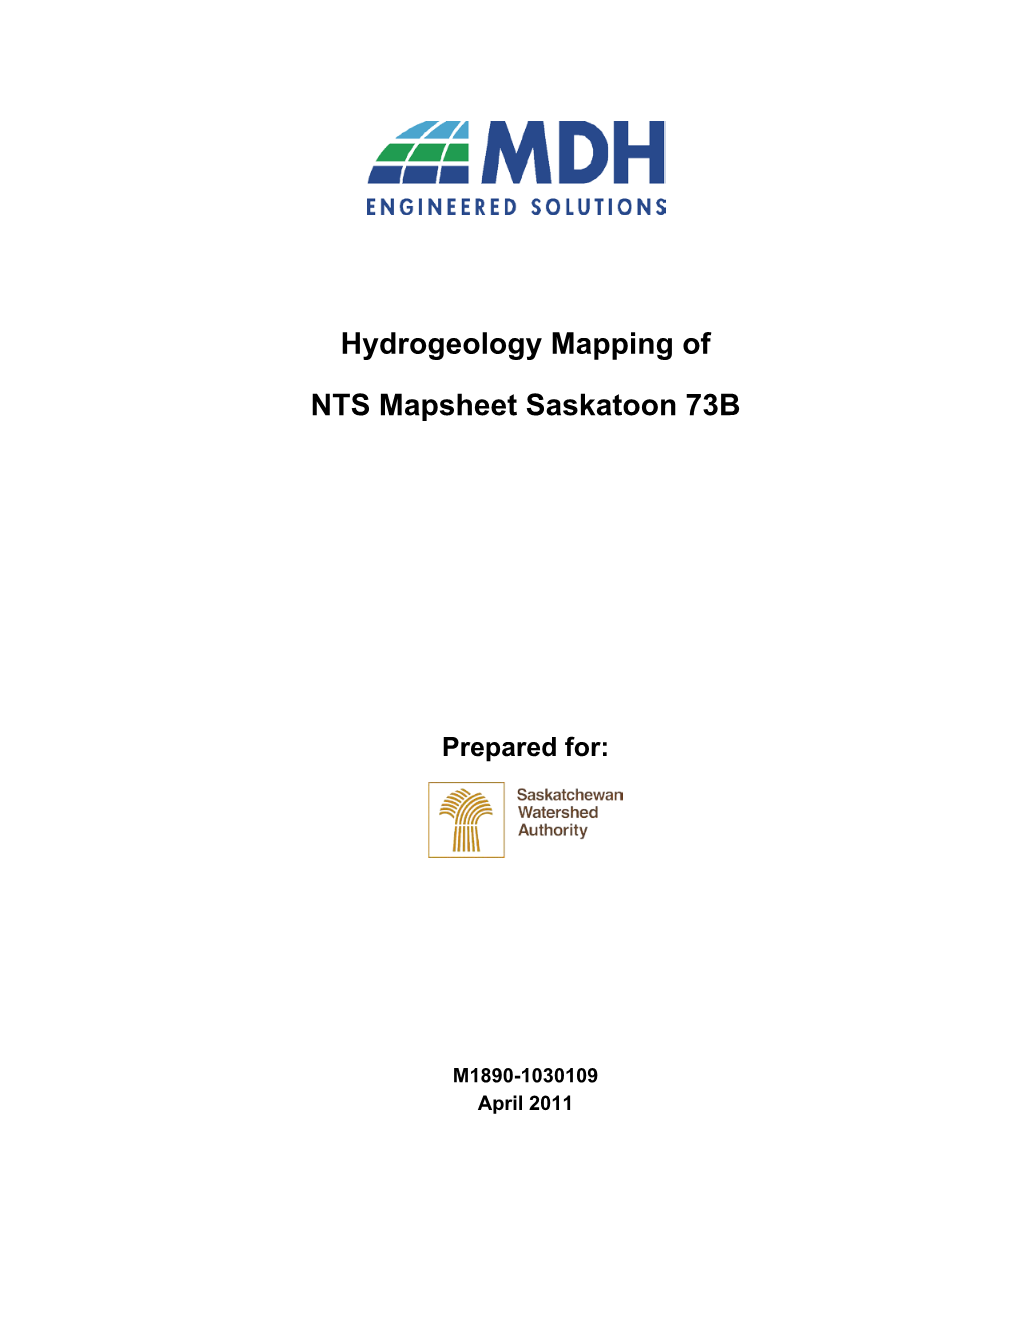 Hydrogeology Mapping of NTS Mapsheet Saskatoon